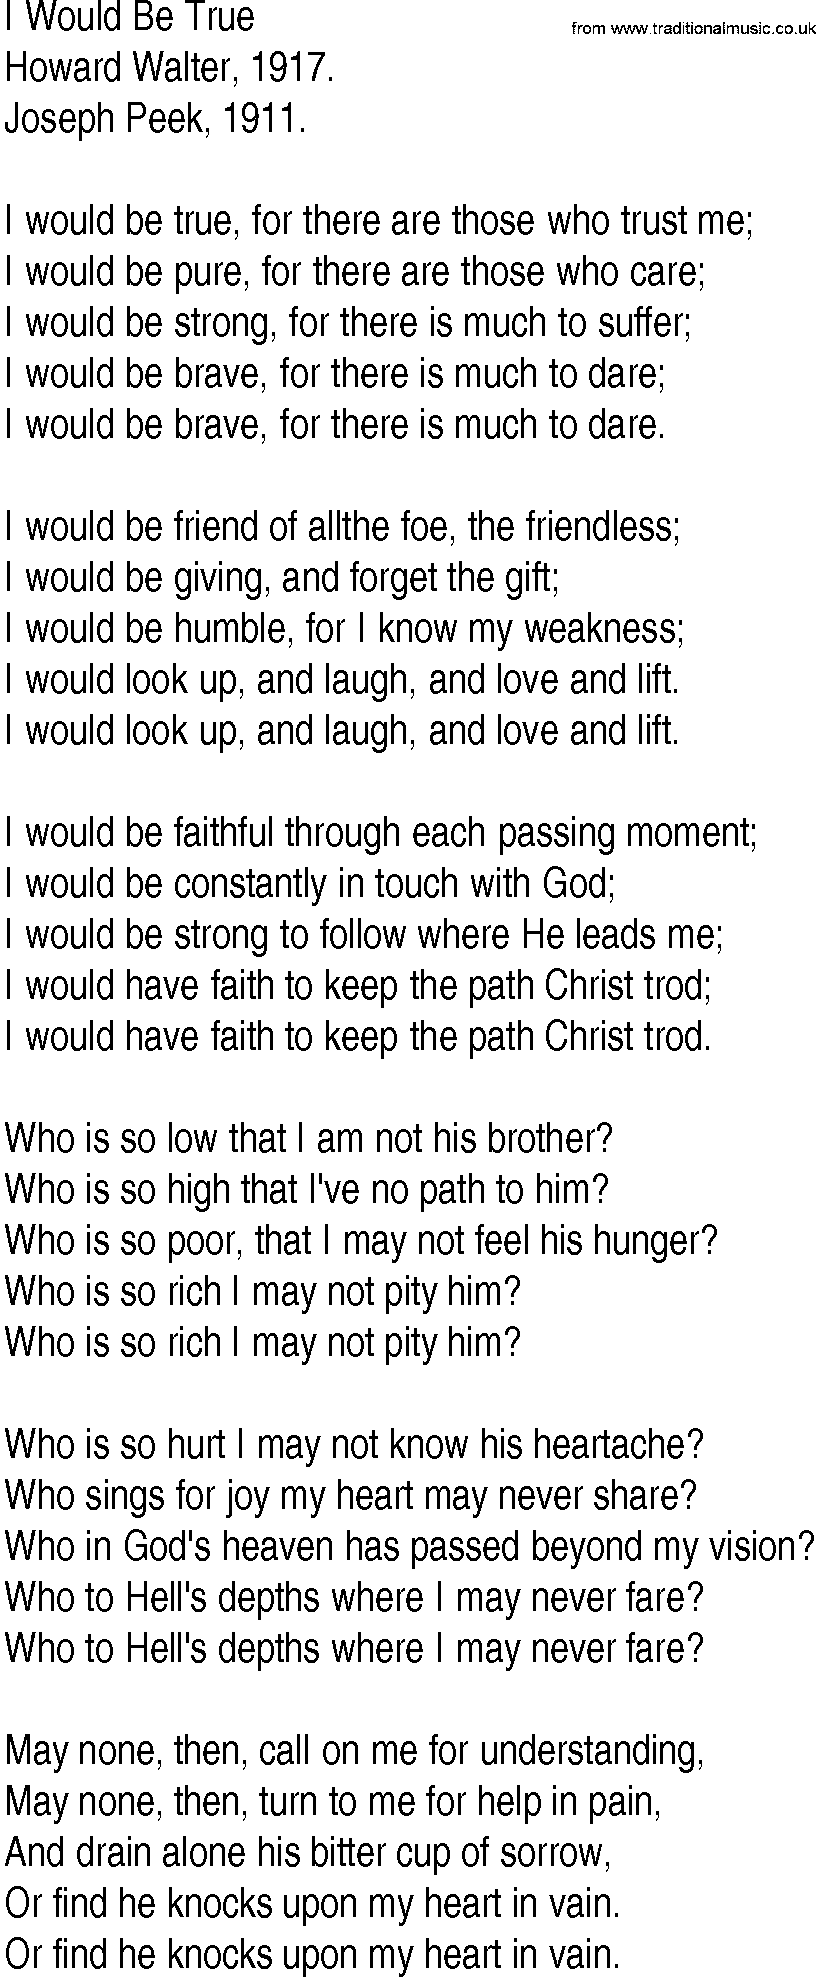 Hymn and Gospel Song: I Would Be True by Howard Walter lyrics